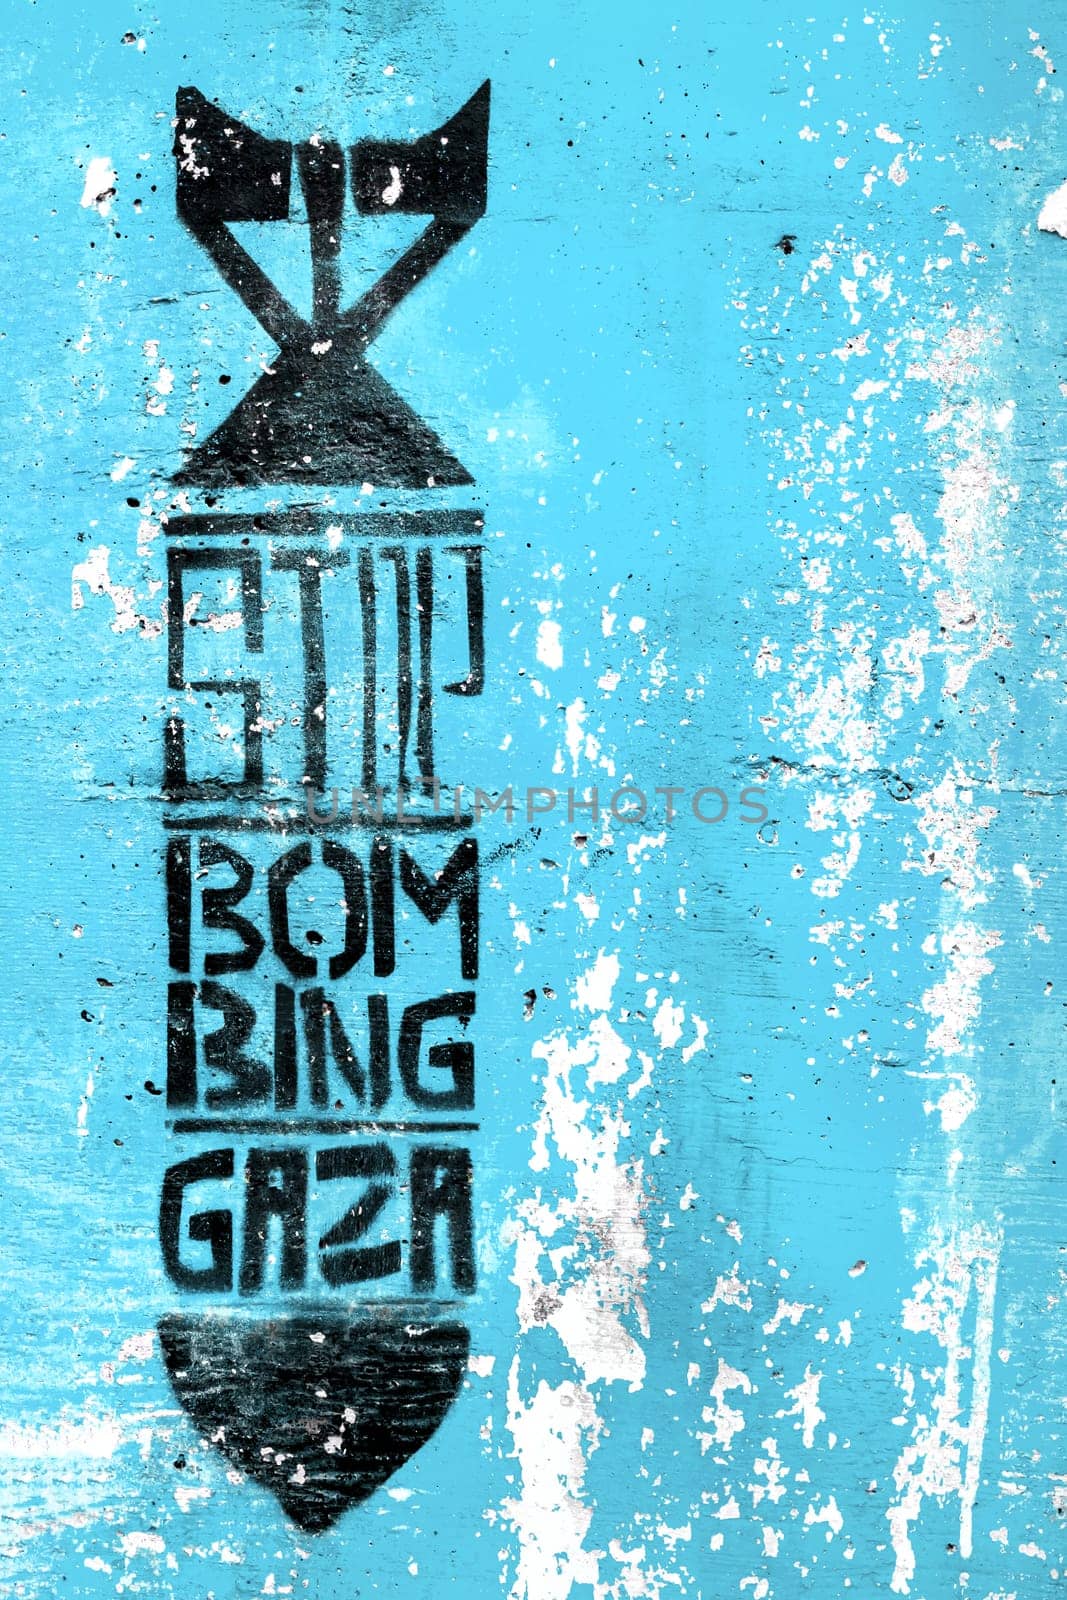 Stop bombing Gaza by germanopoli